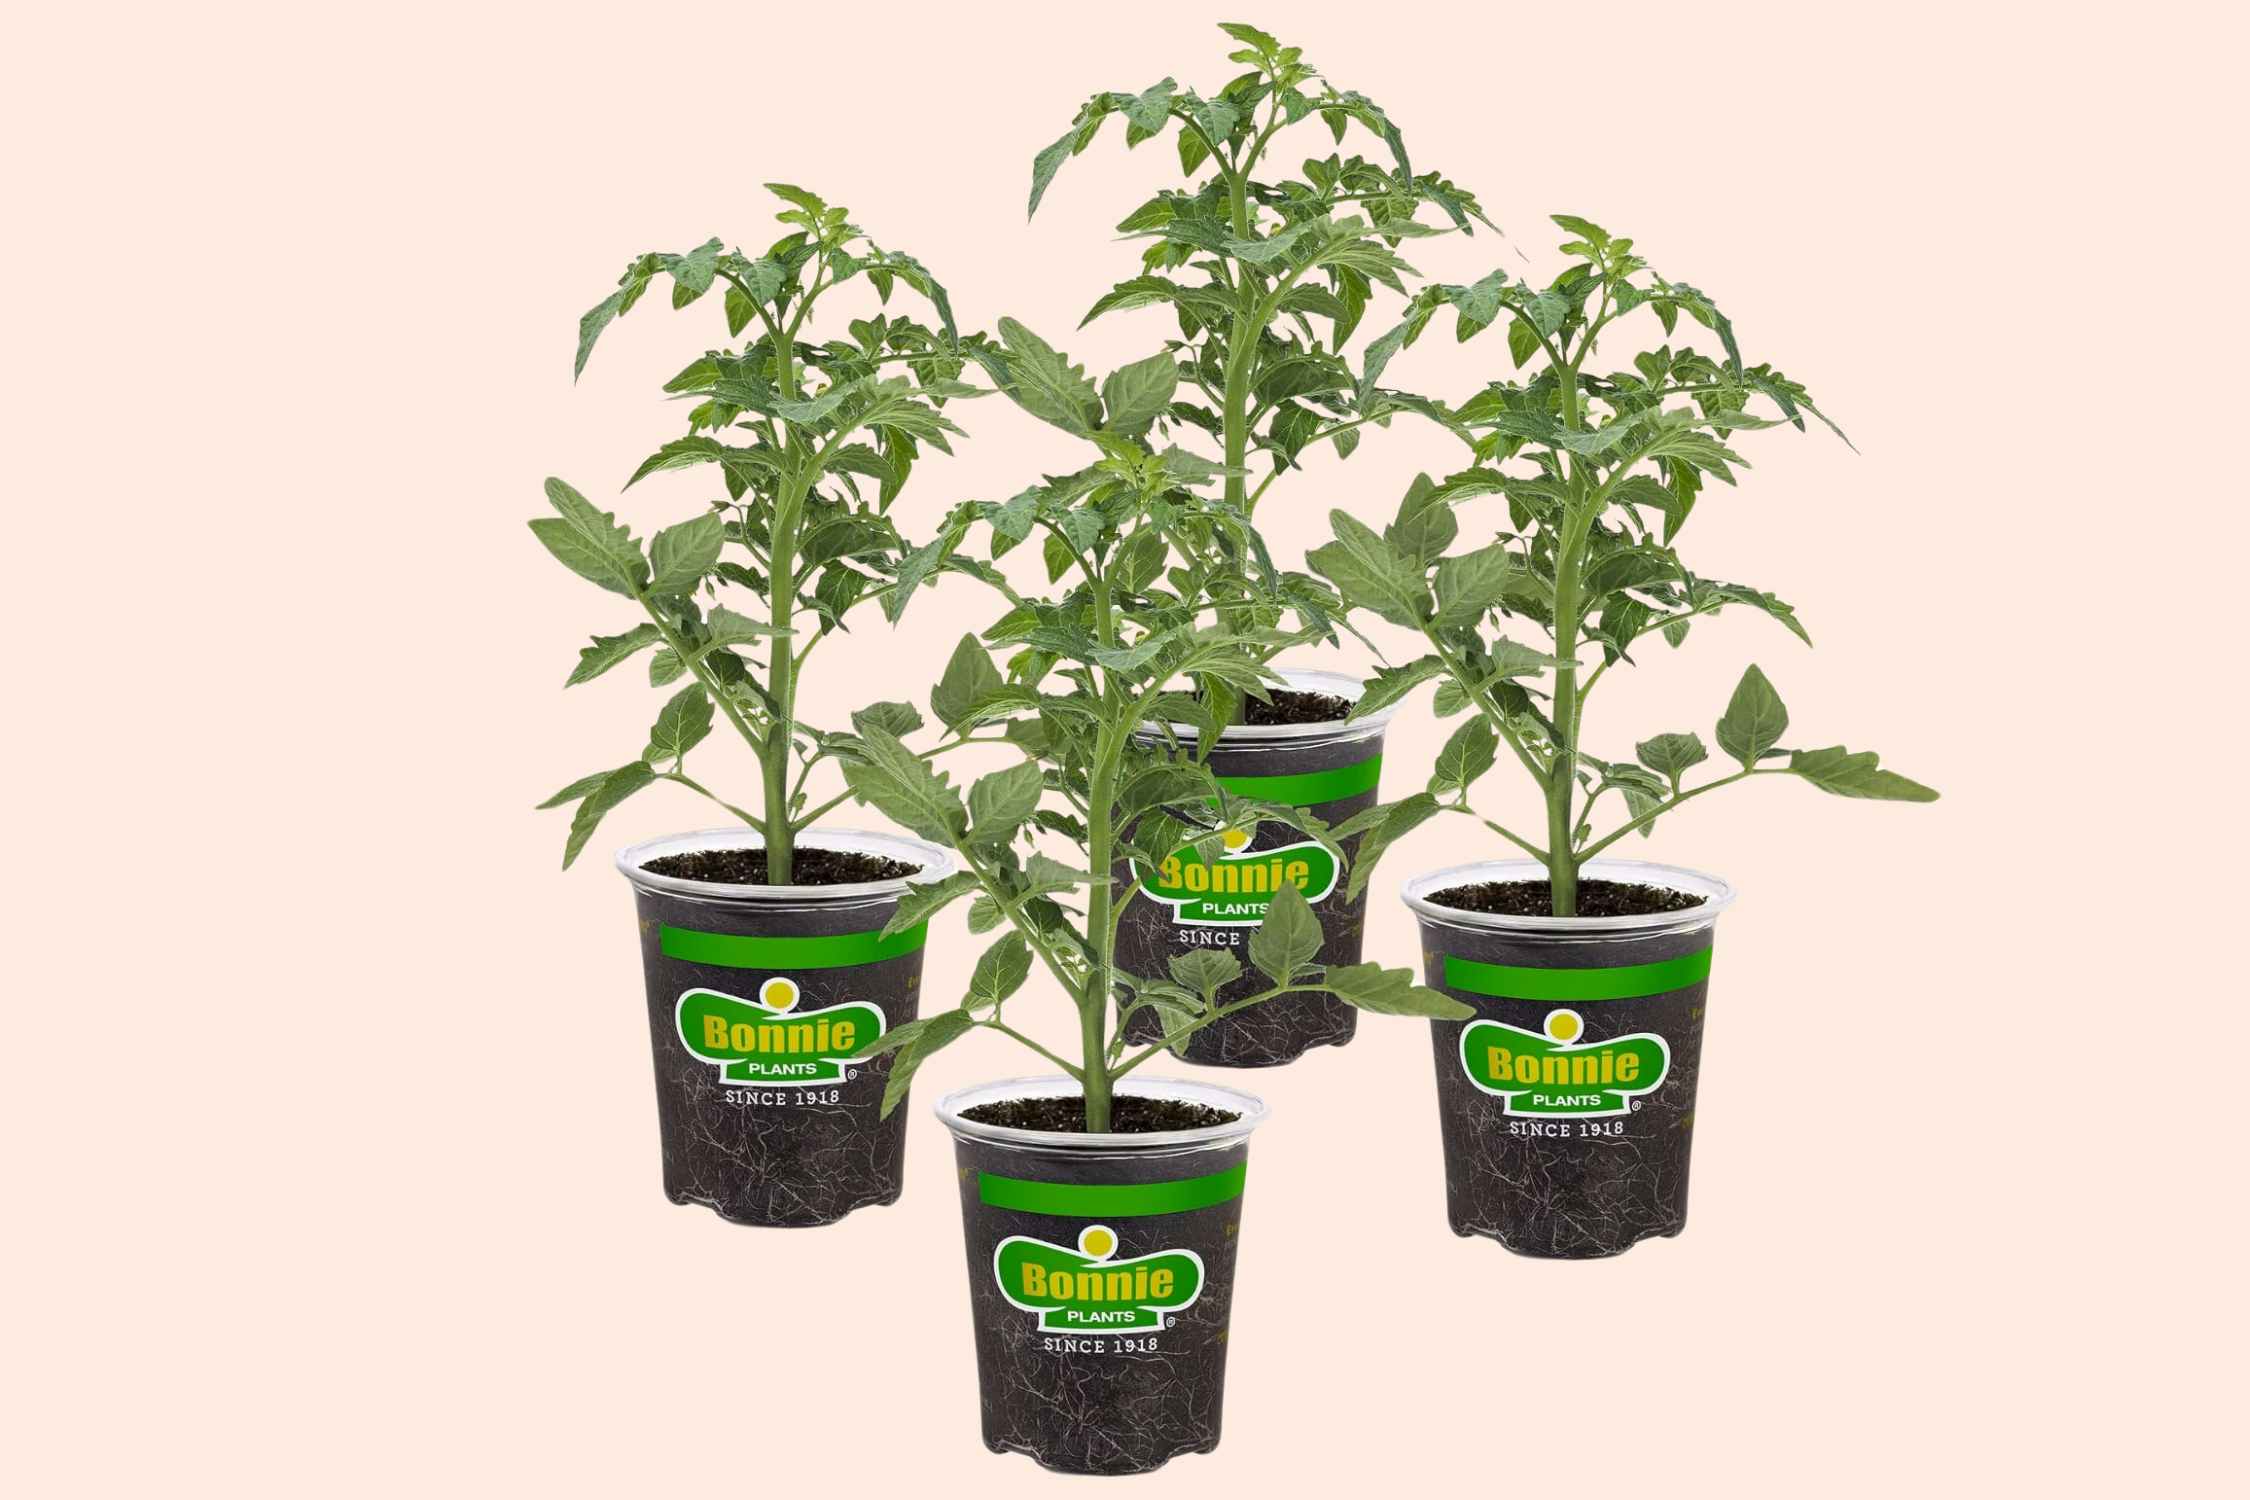 Big Beef Tomato Plants 4-Pack, Just $19.98 on Amazon